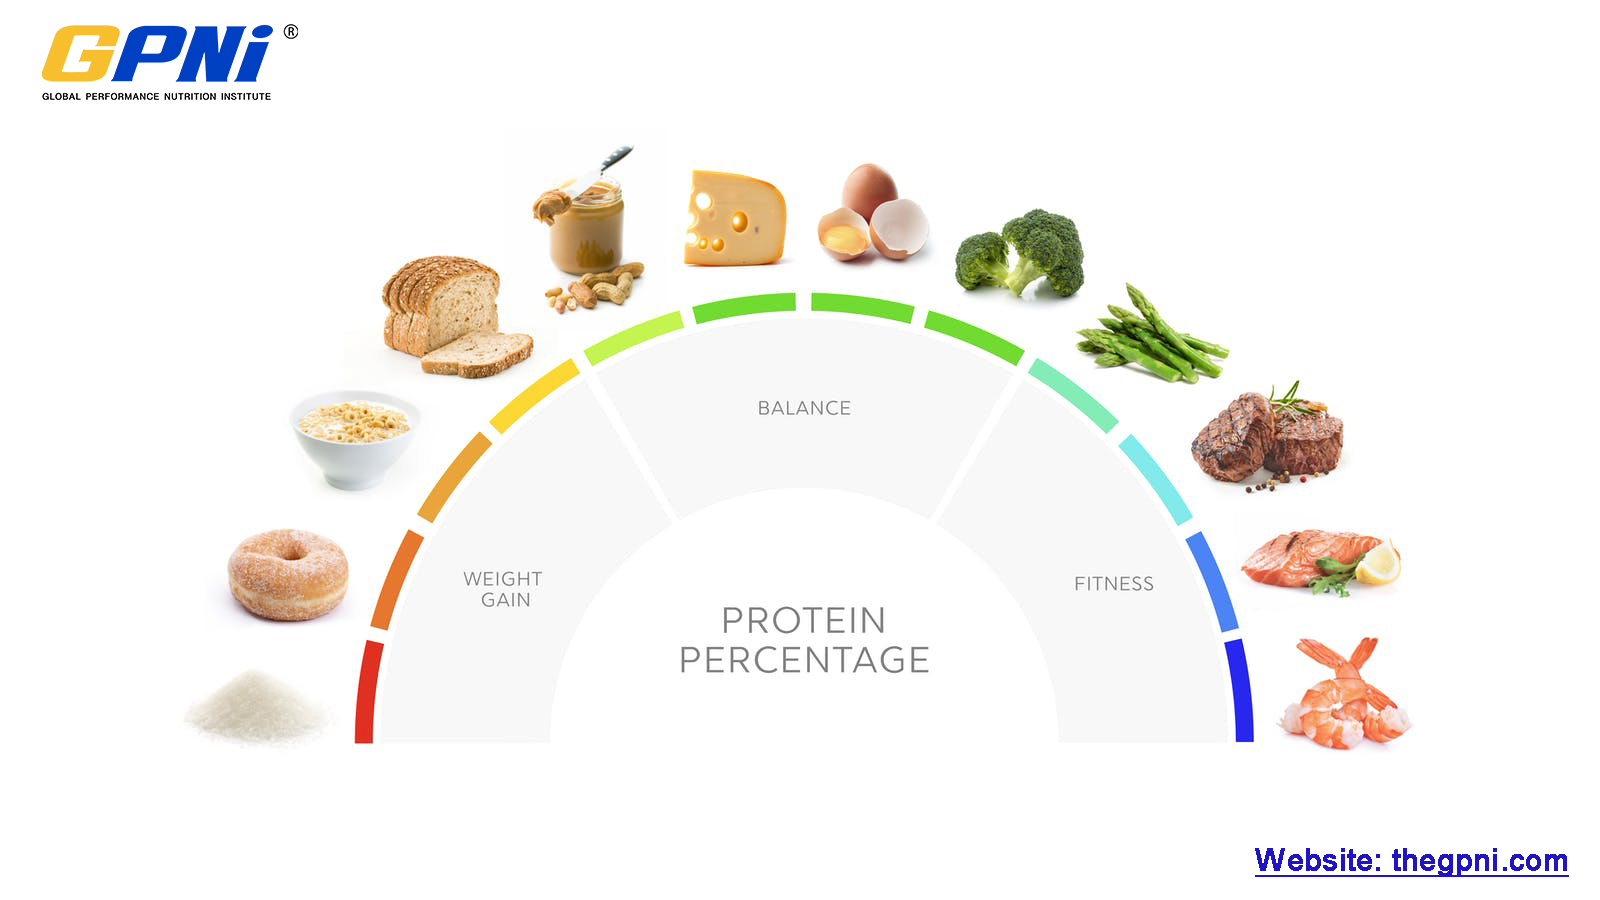 Protein percentage